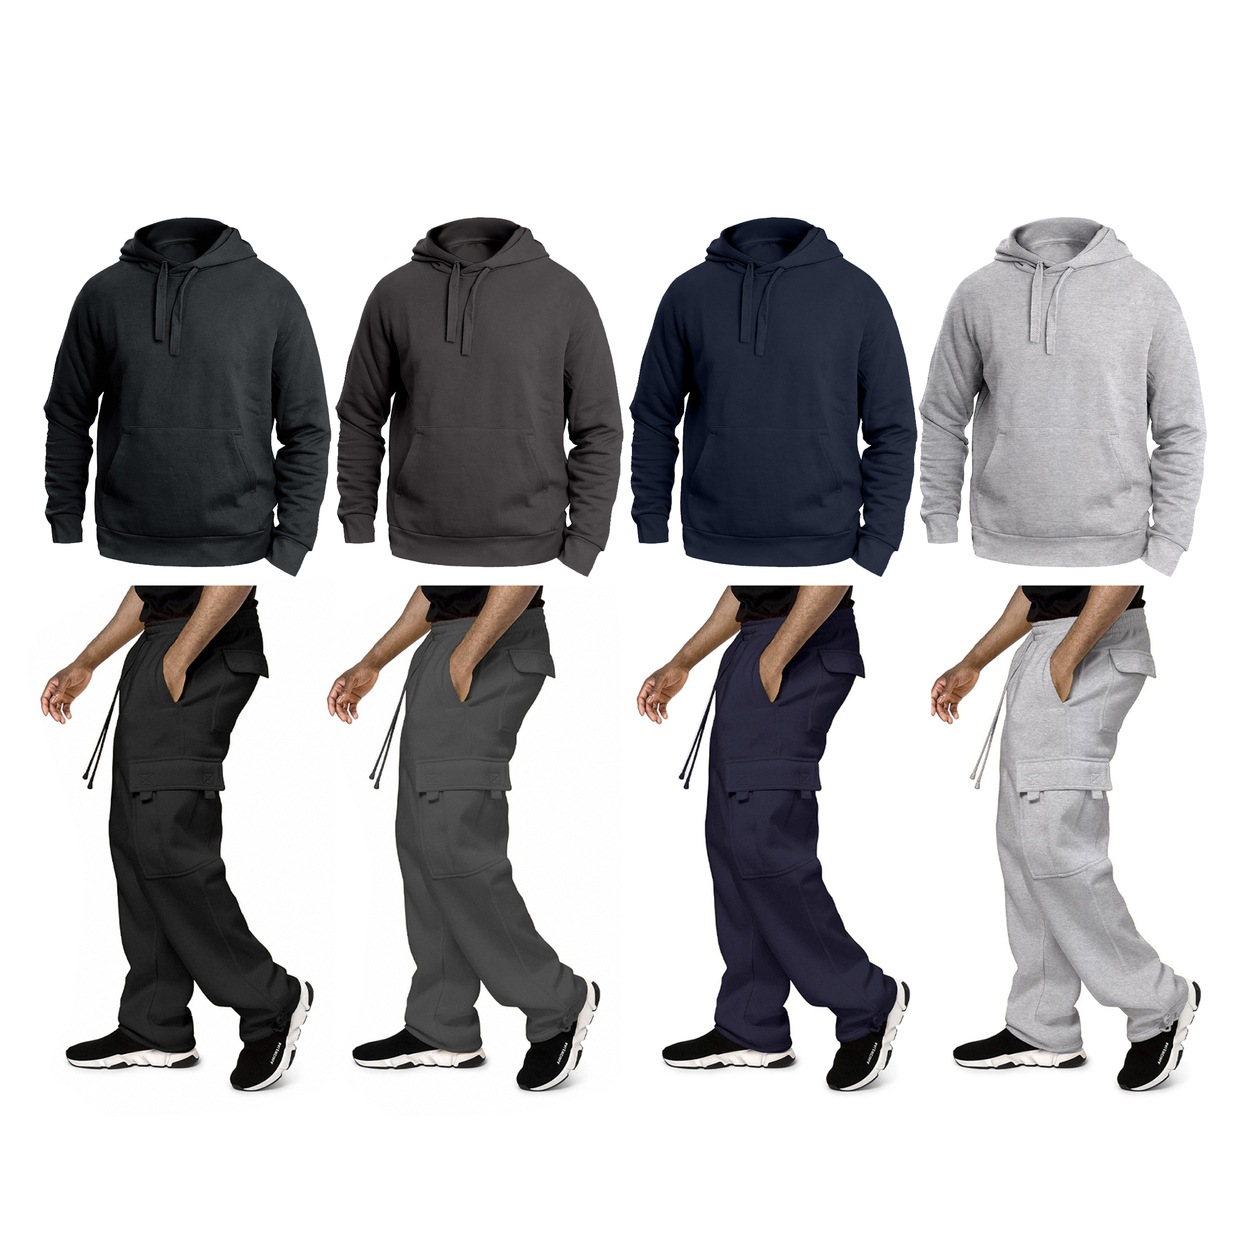 2-Pack: Men's Big & Tall Winter Warm Cozy Athletic Fleece Lined Multi-Pocket Cargo Sweatsuit - Black, Small